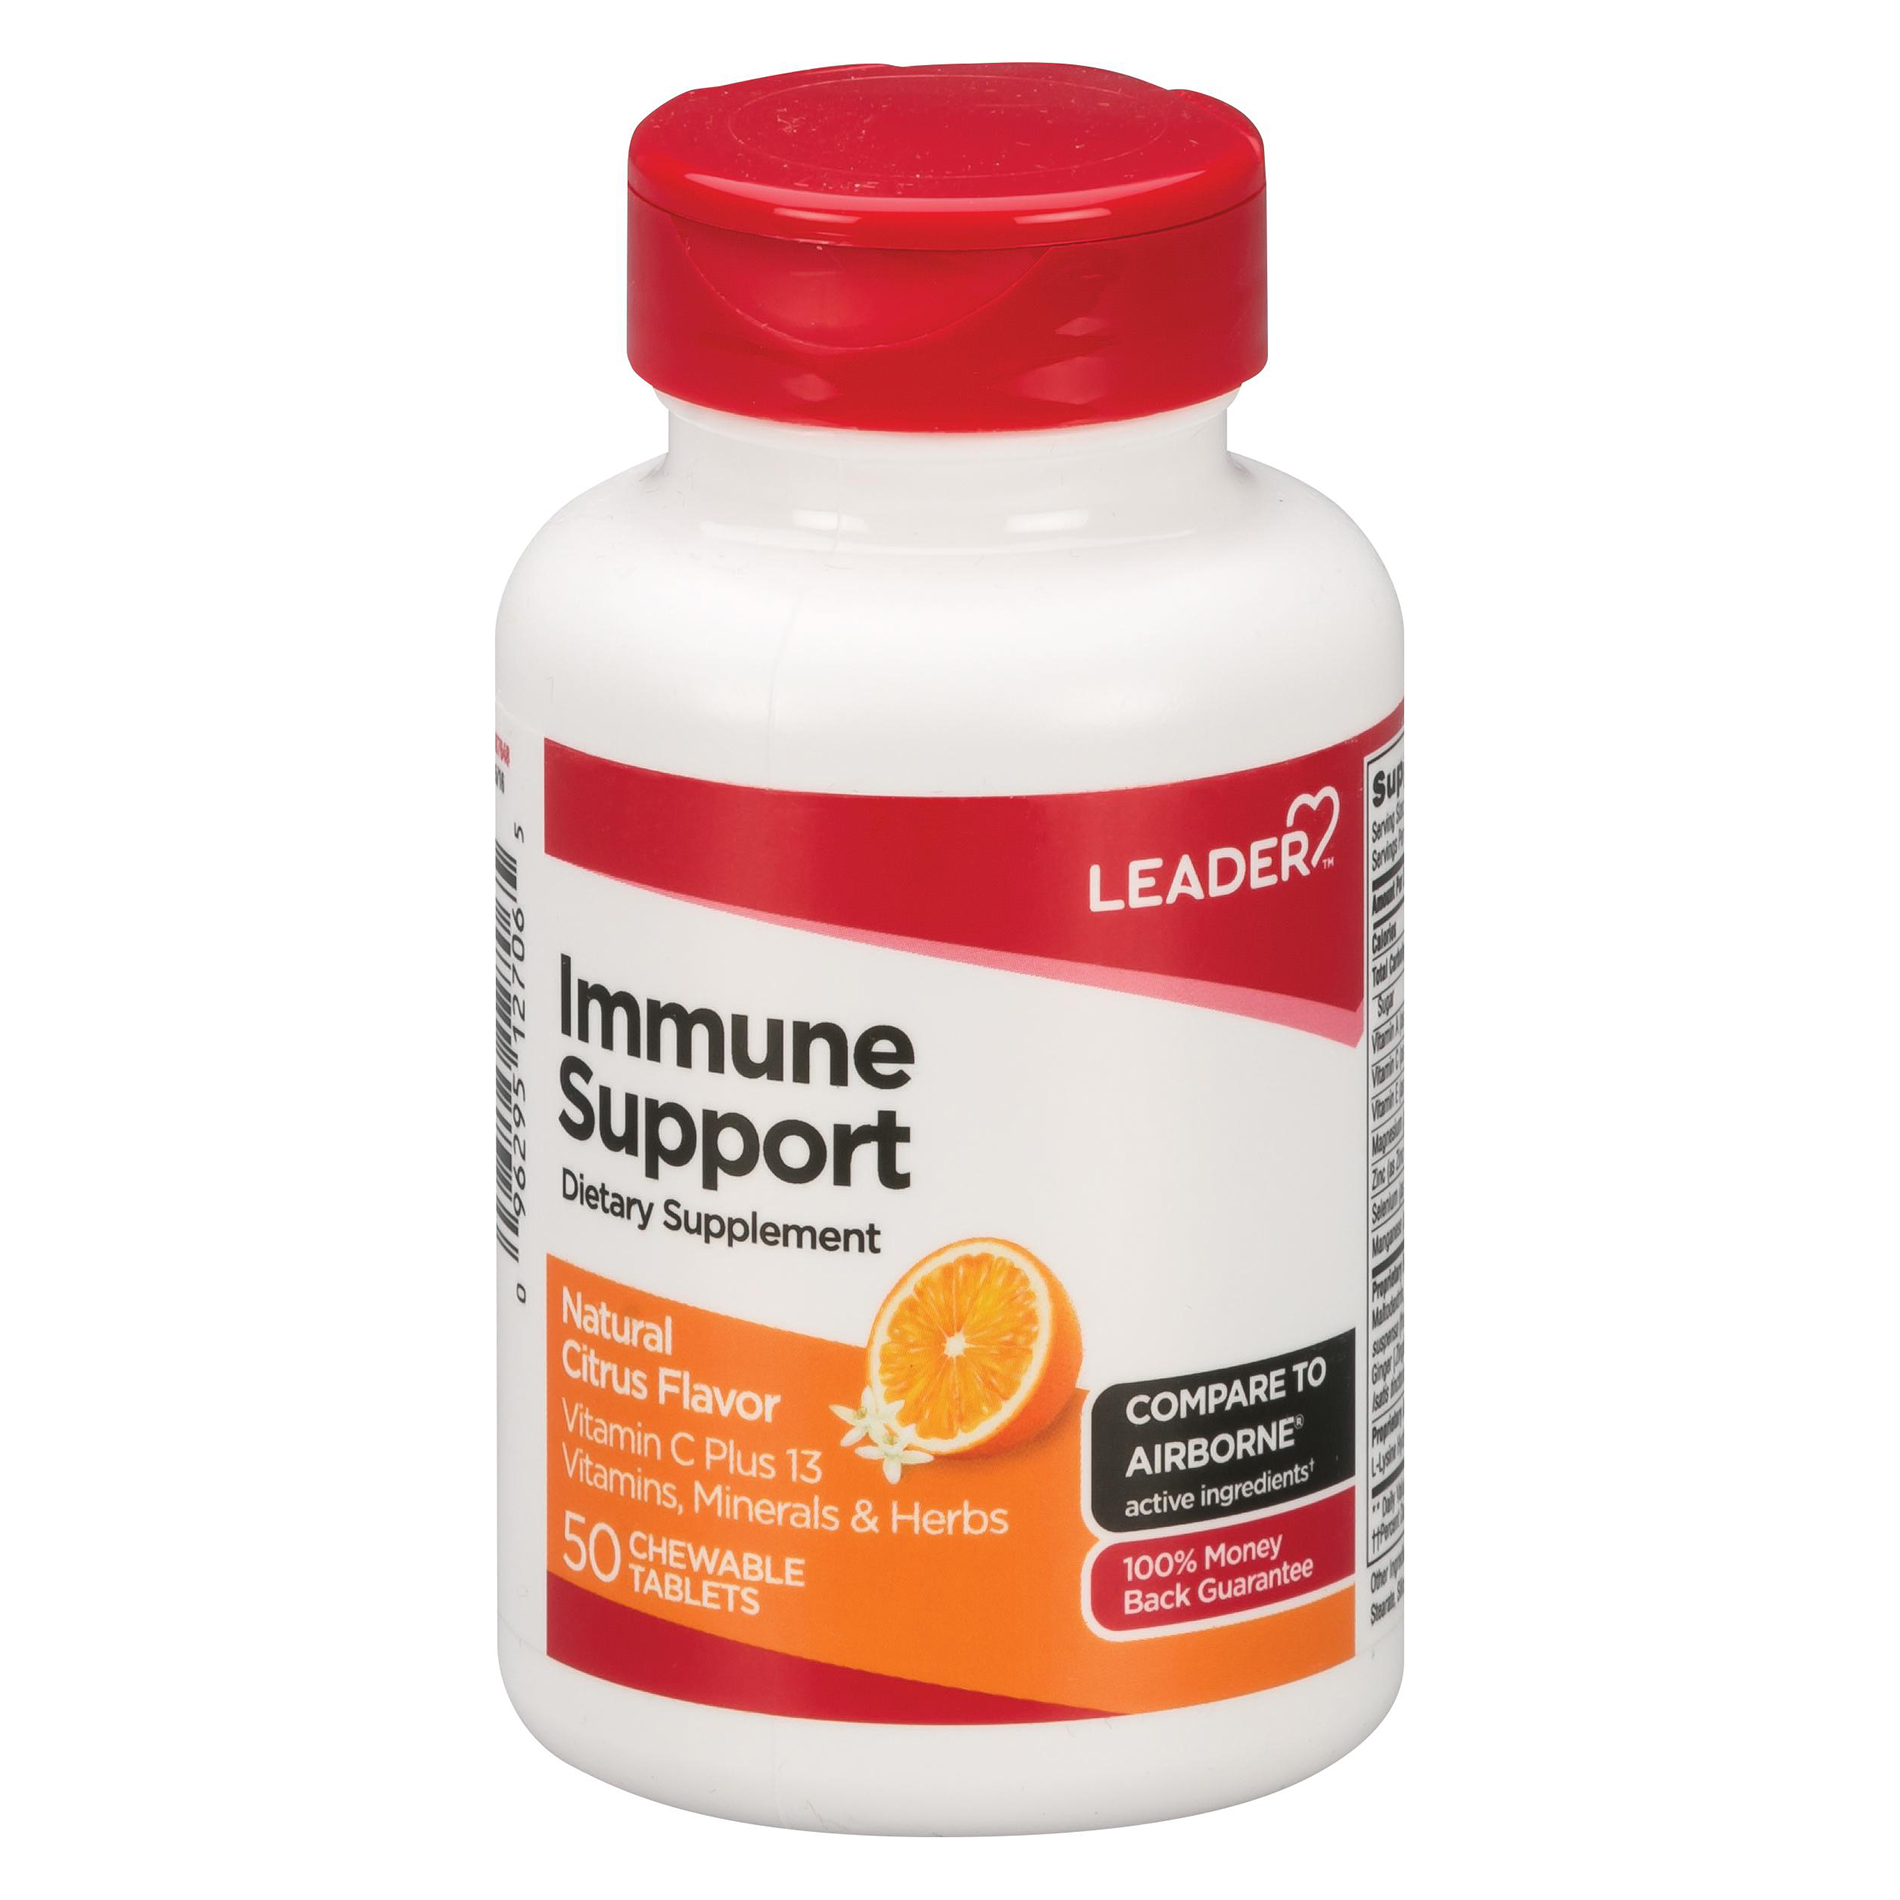 Leader Immune Support Chewable Tablets -  Natural Citrus Flavor, 50 Count